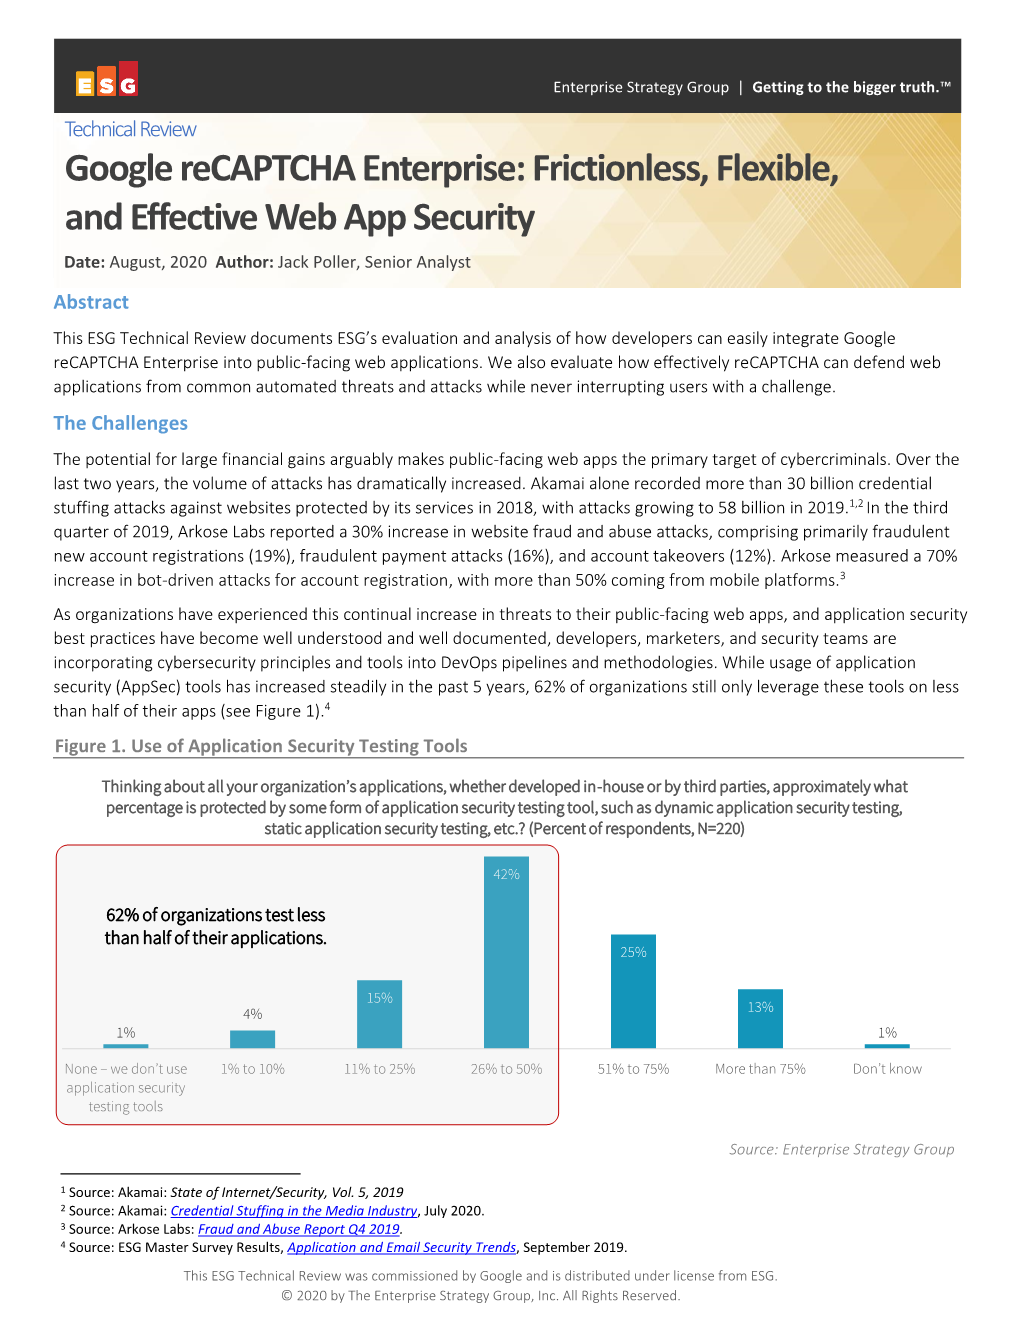 Google Recaptcha Enterprise: Frictionless, Flexible, and Effective